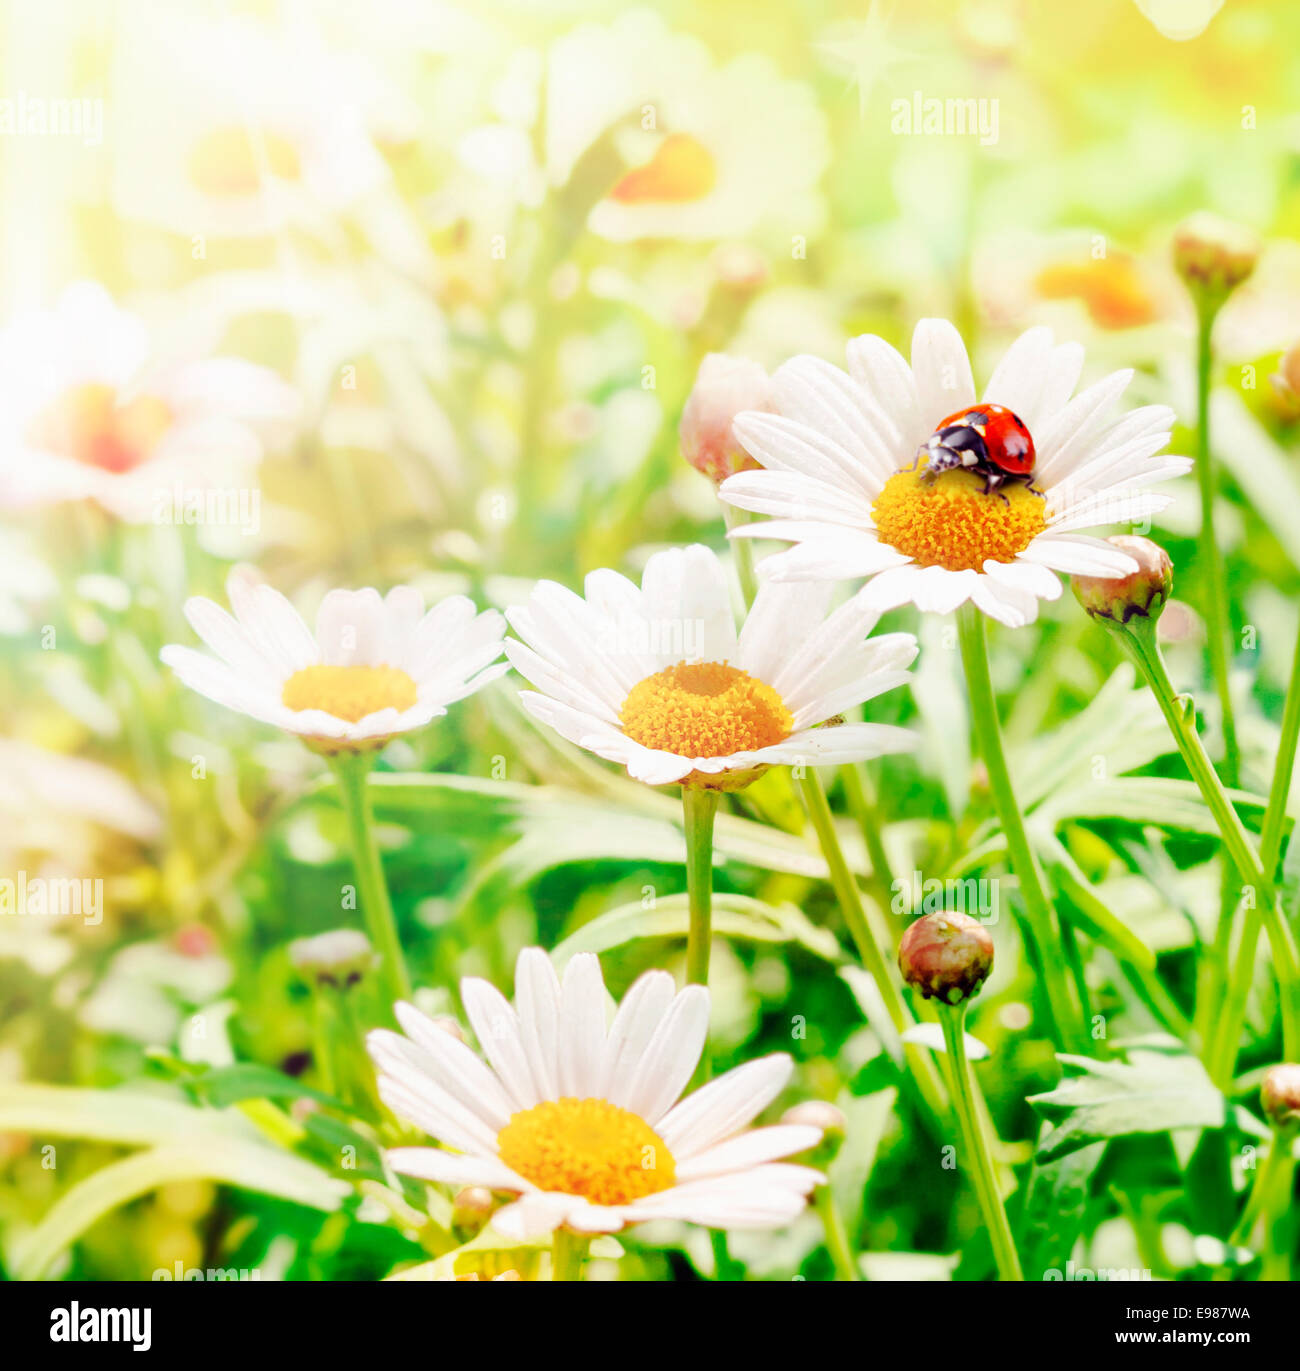 Ladybug Flower Hopper on daisies at springtime Stock Photo